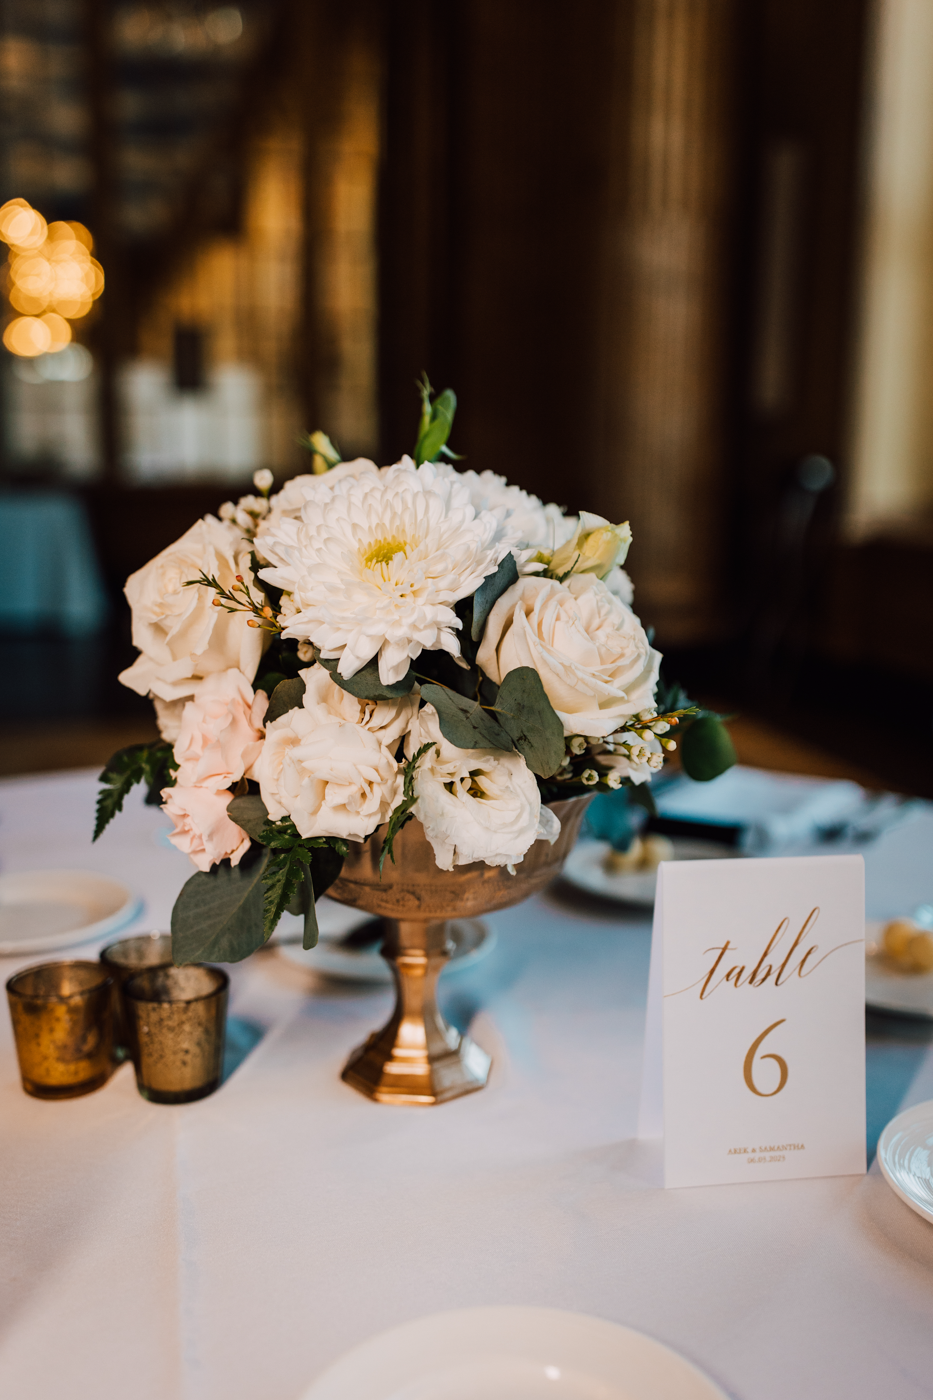  Reception decor of a floral arrangement inside a gold vase as table decor for this elegant ballroom wedding 